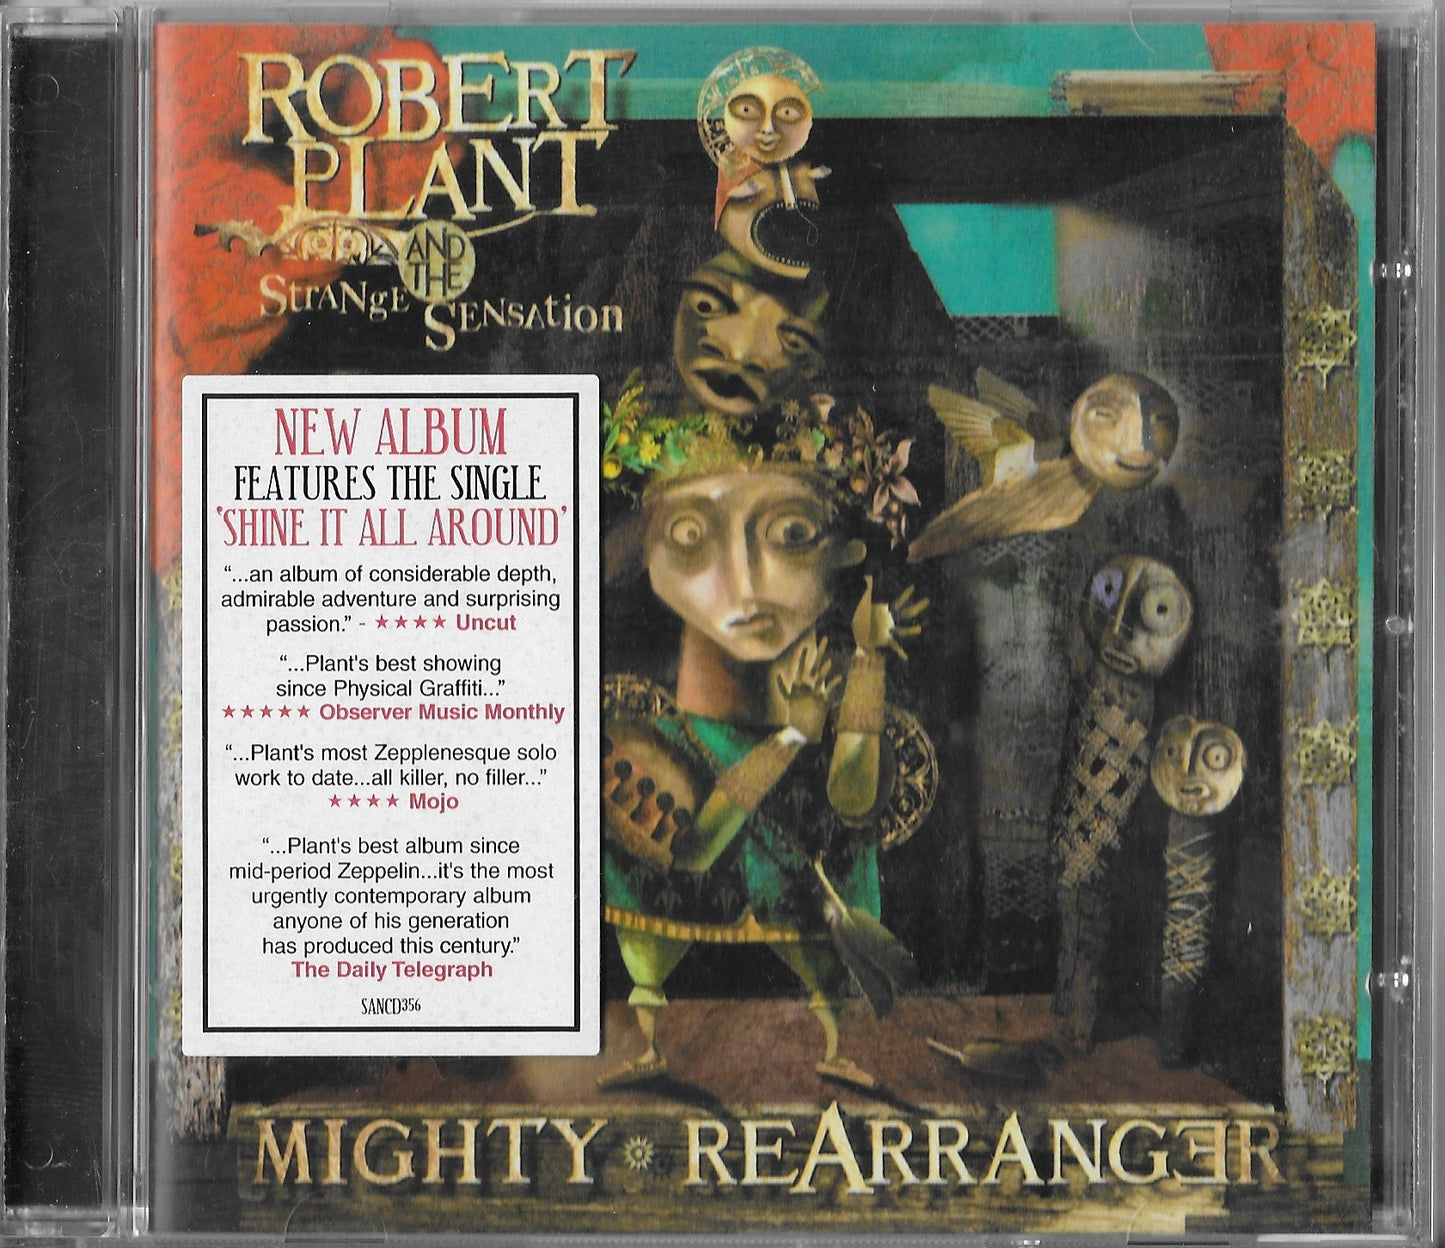 ROBERT PLANT AND THE STRANGE SENSATION - Mighty Rearranger